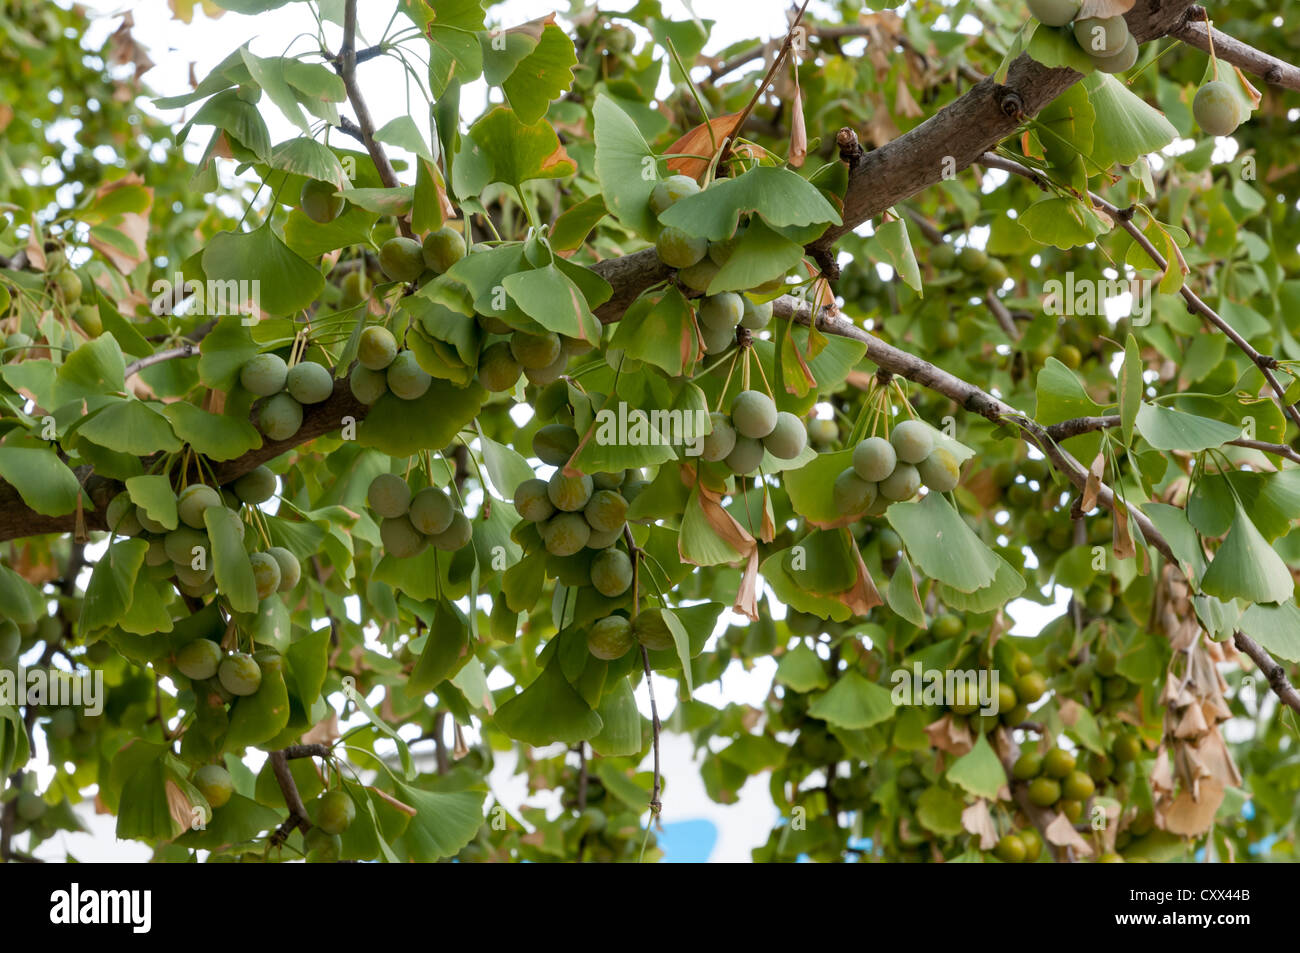 Leaves of Gingko Biloba tree Stock Photo